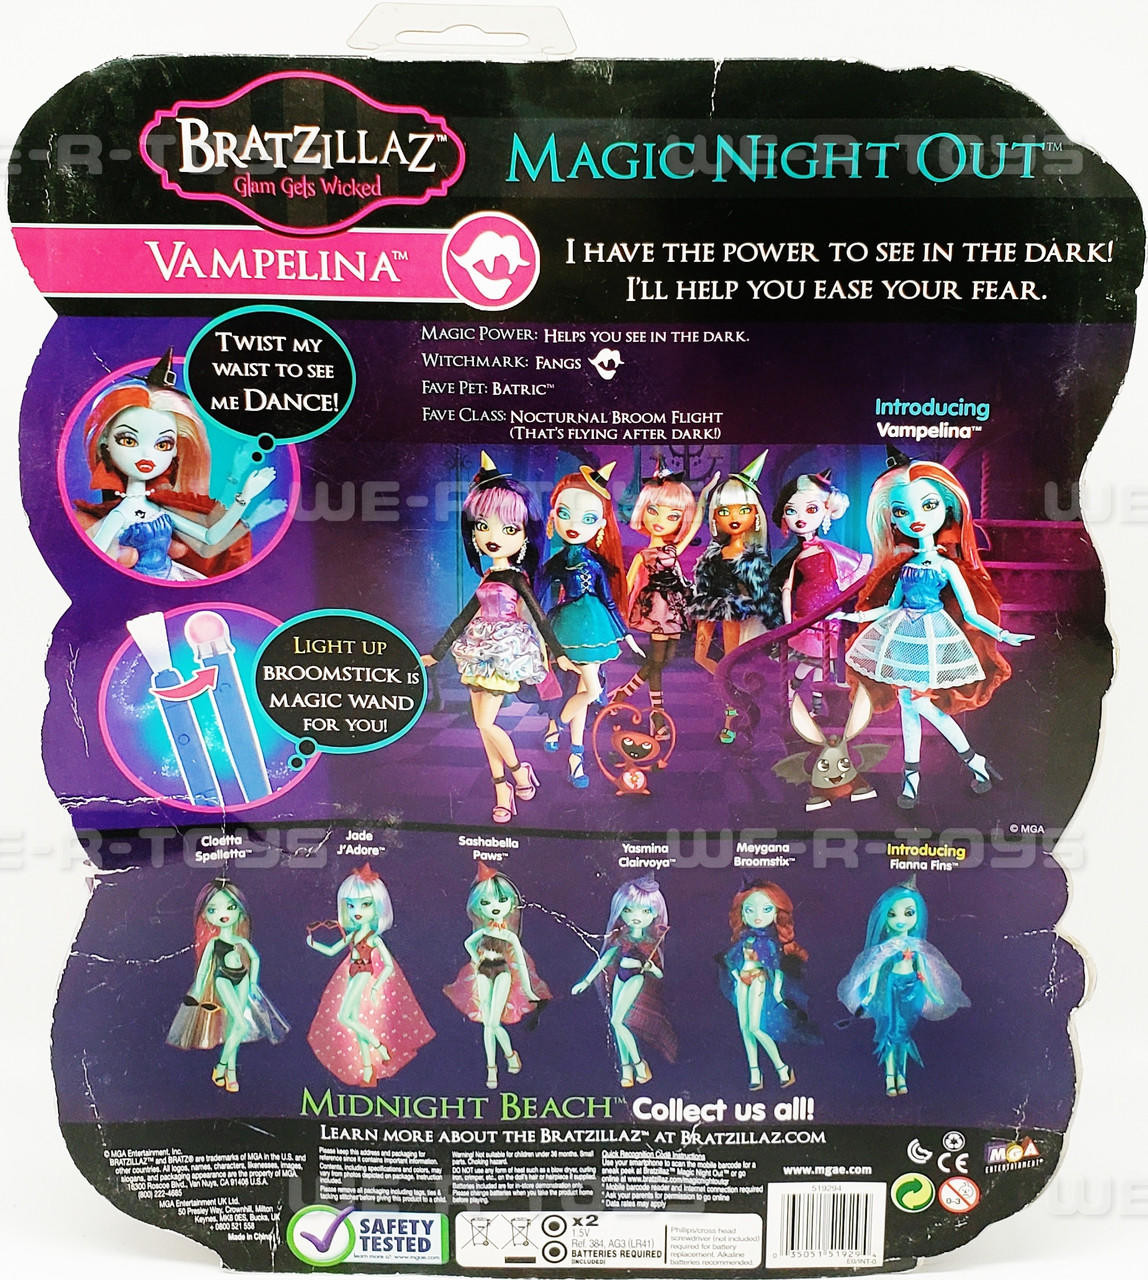 Bratzilla Magic Night Out Vampelina Doll With Light Up Broom Stick Wand MGA  NEW - We-R-Toys